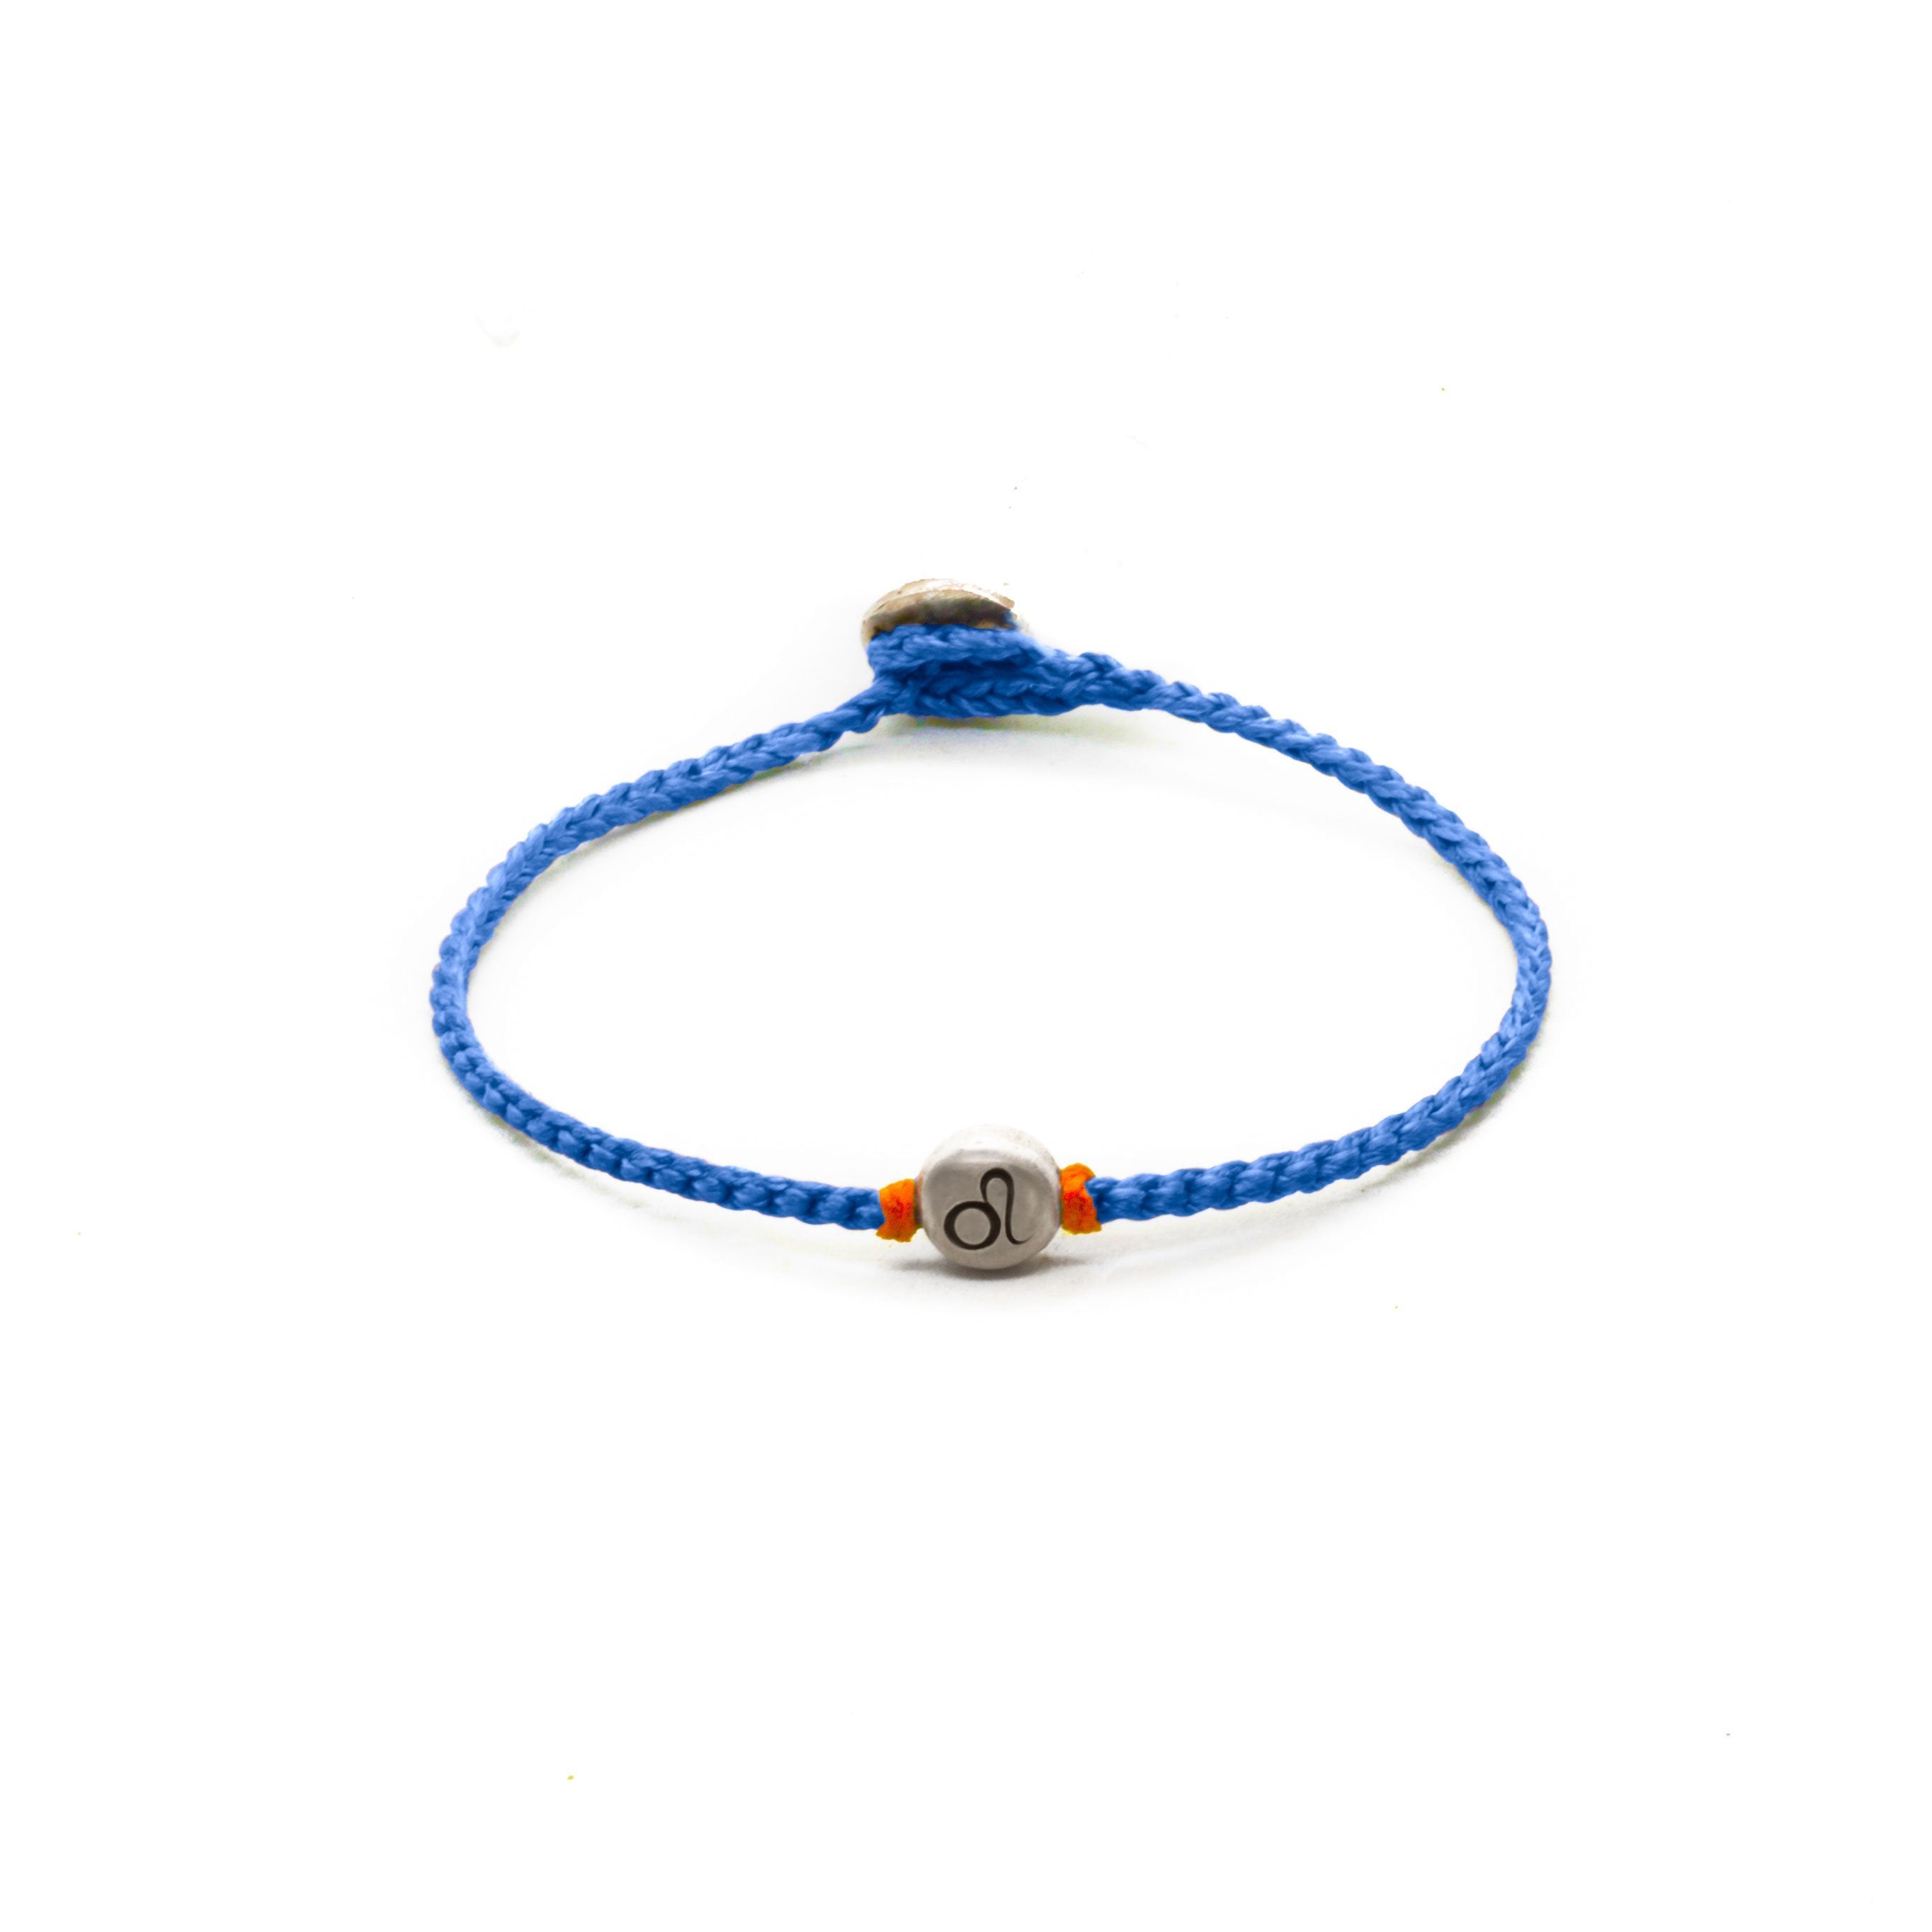 Silver Leo zodiac sign bracelet with blue hand braided chain.